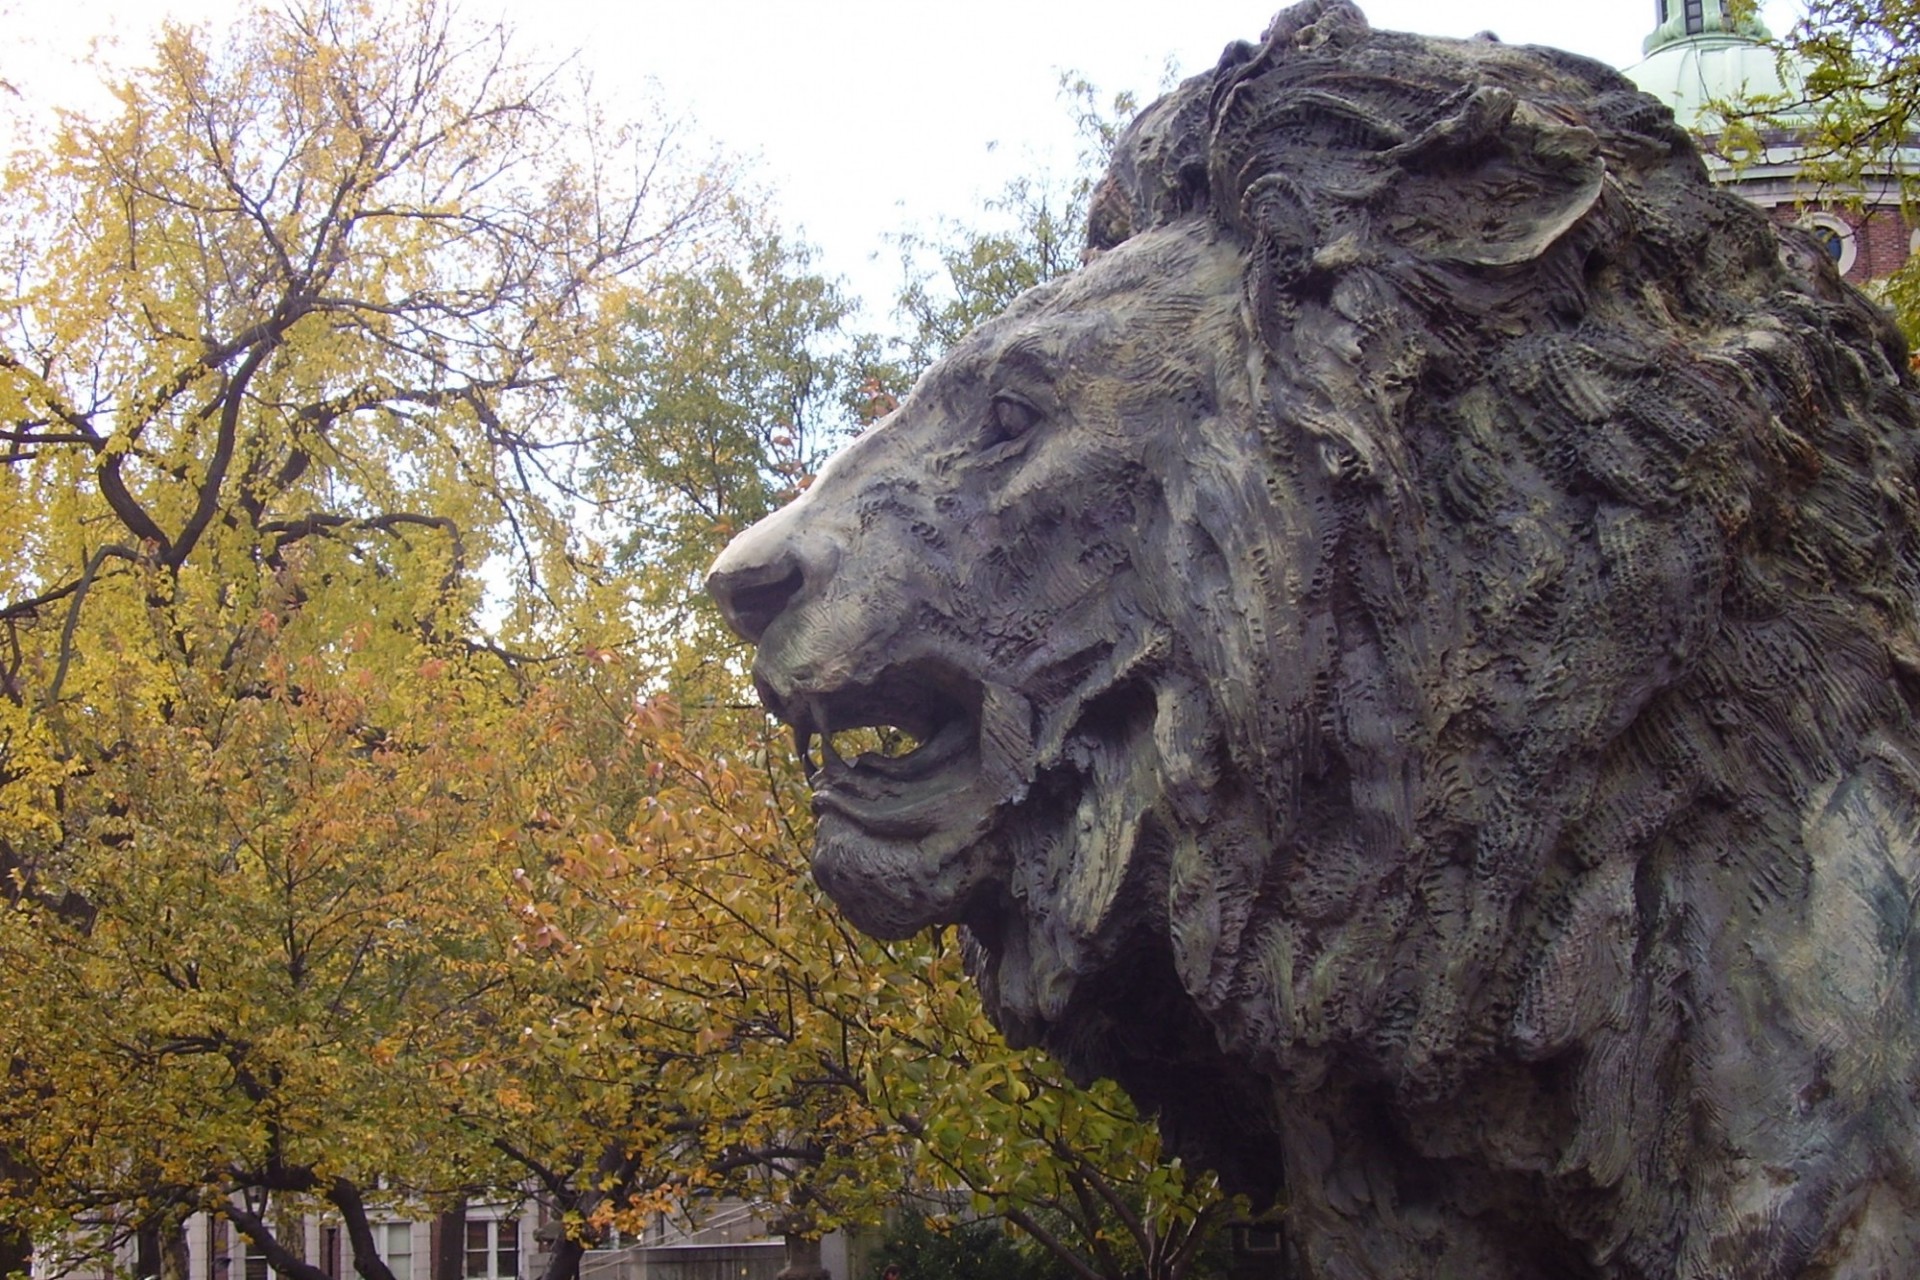 Scholarly Lion at Columbia University